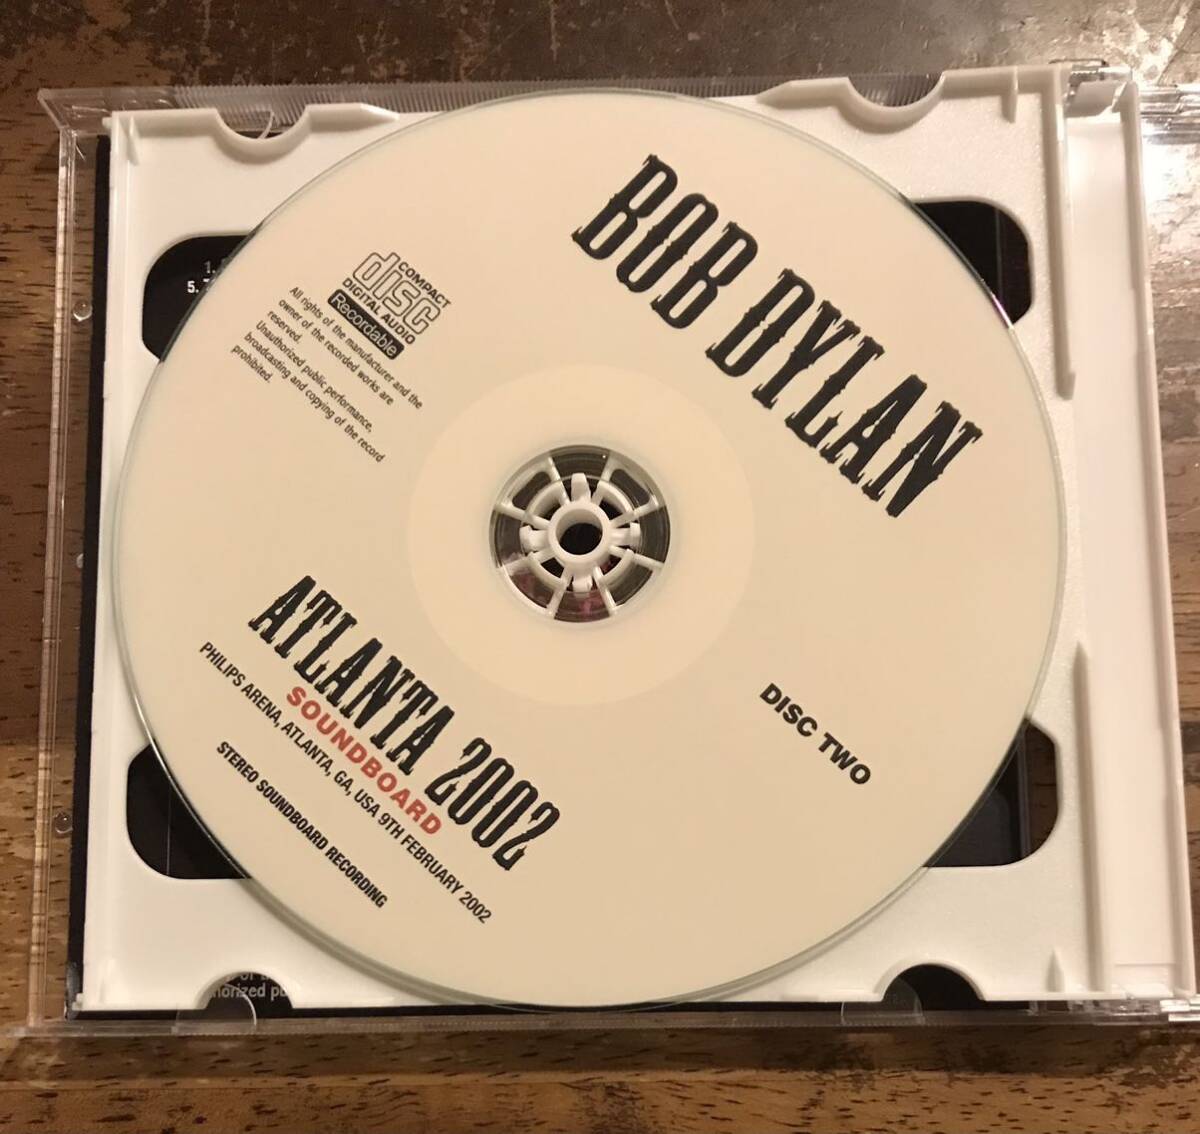 Bob Dylan / Atlanta 2002 Soundboard / 2CDR / Philip’s Arena, Atlanta, GA, 9th February 2002 / Stereo Soundboard Recording / ボブの画像7